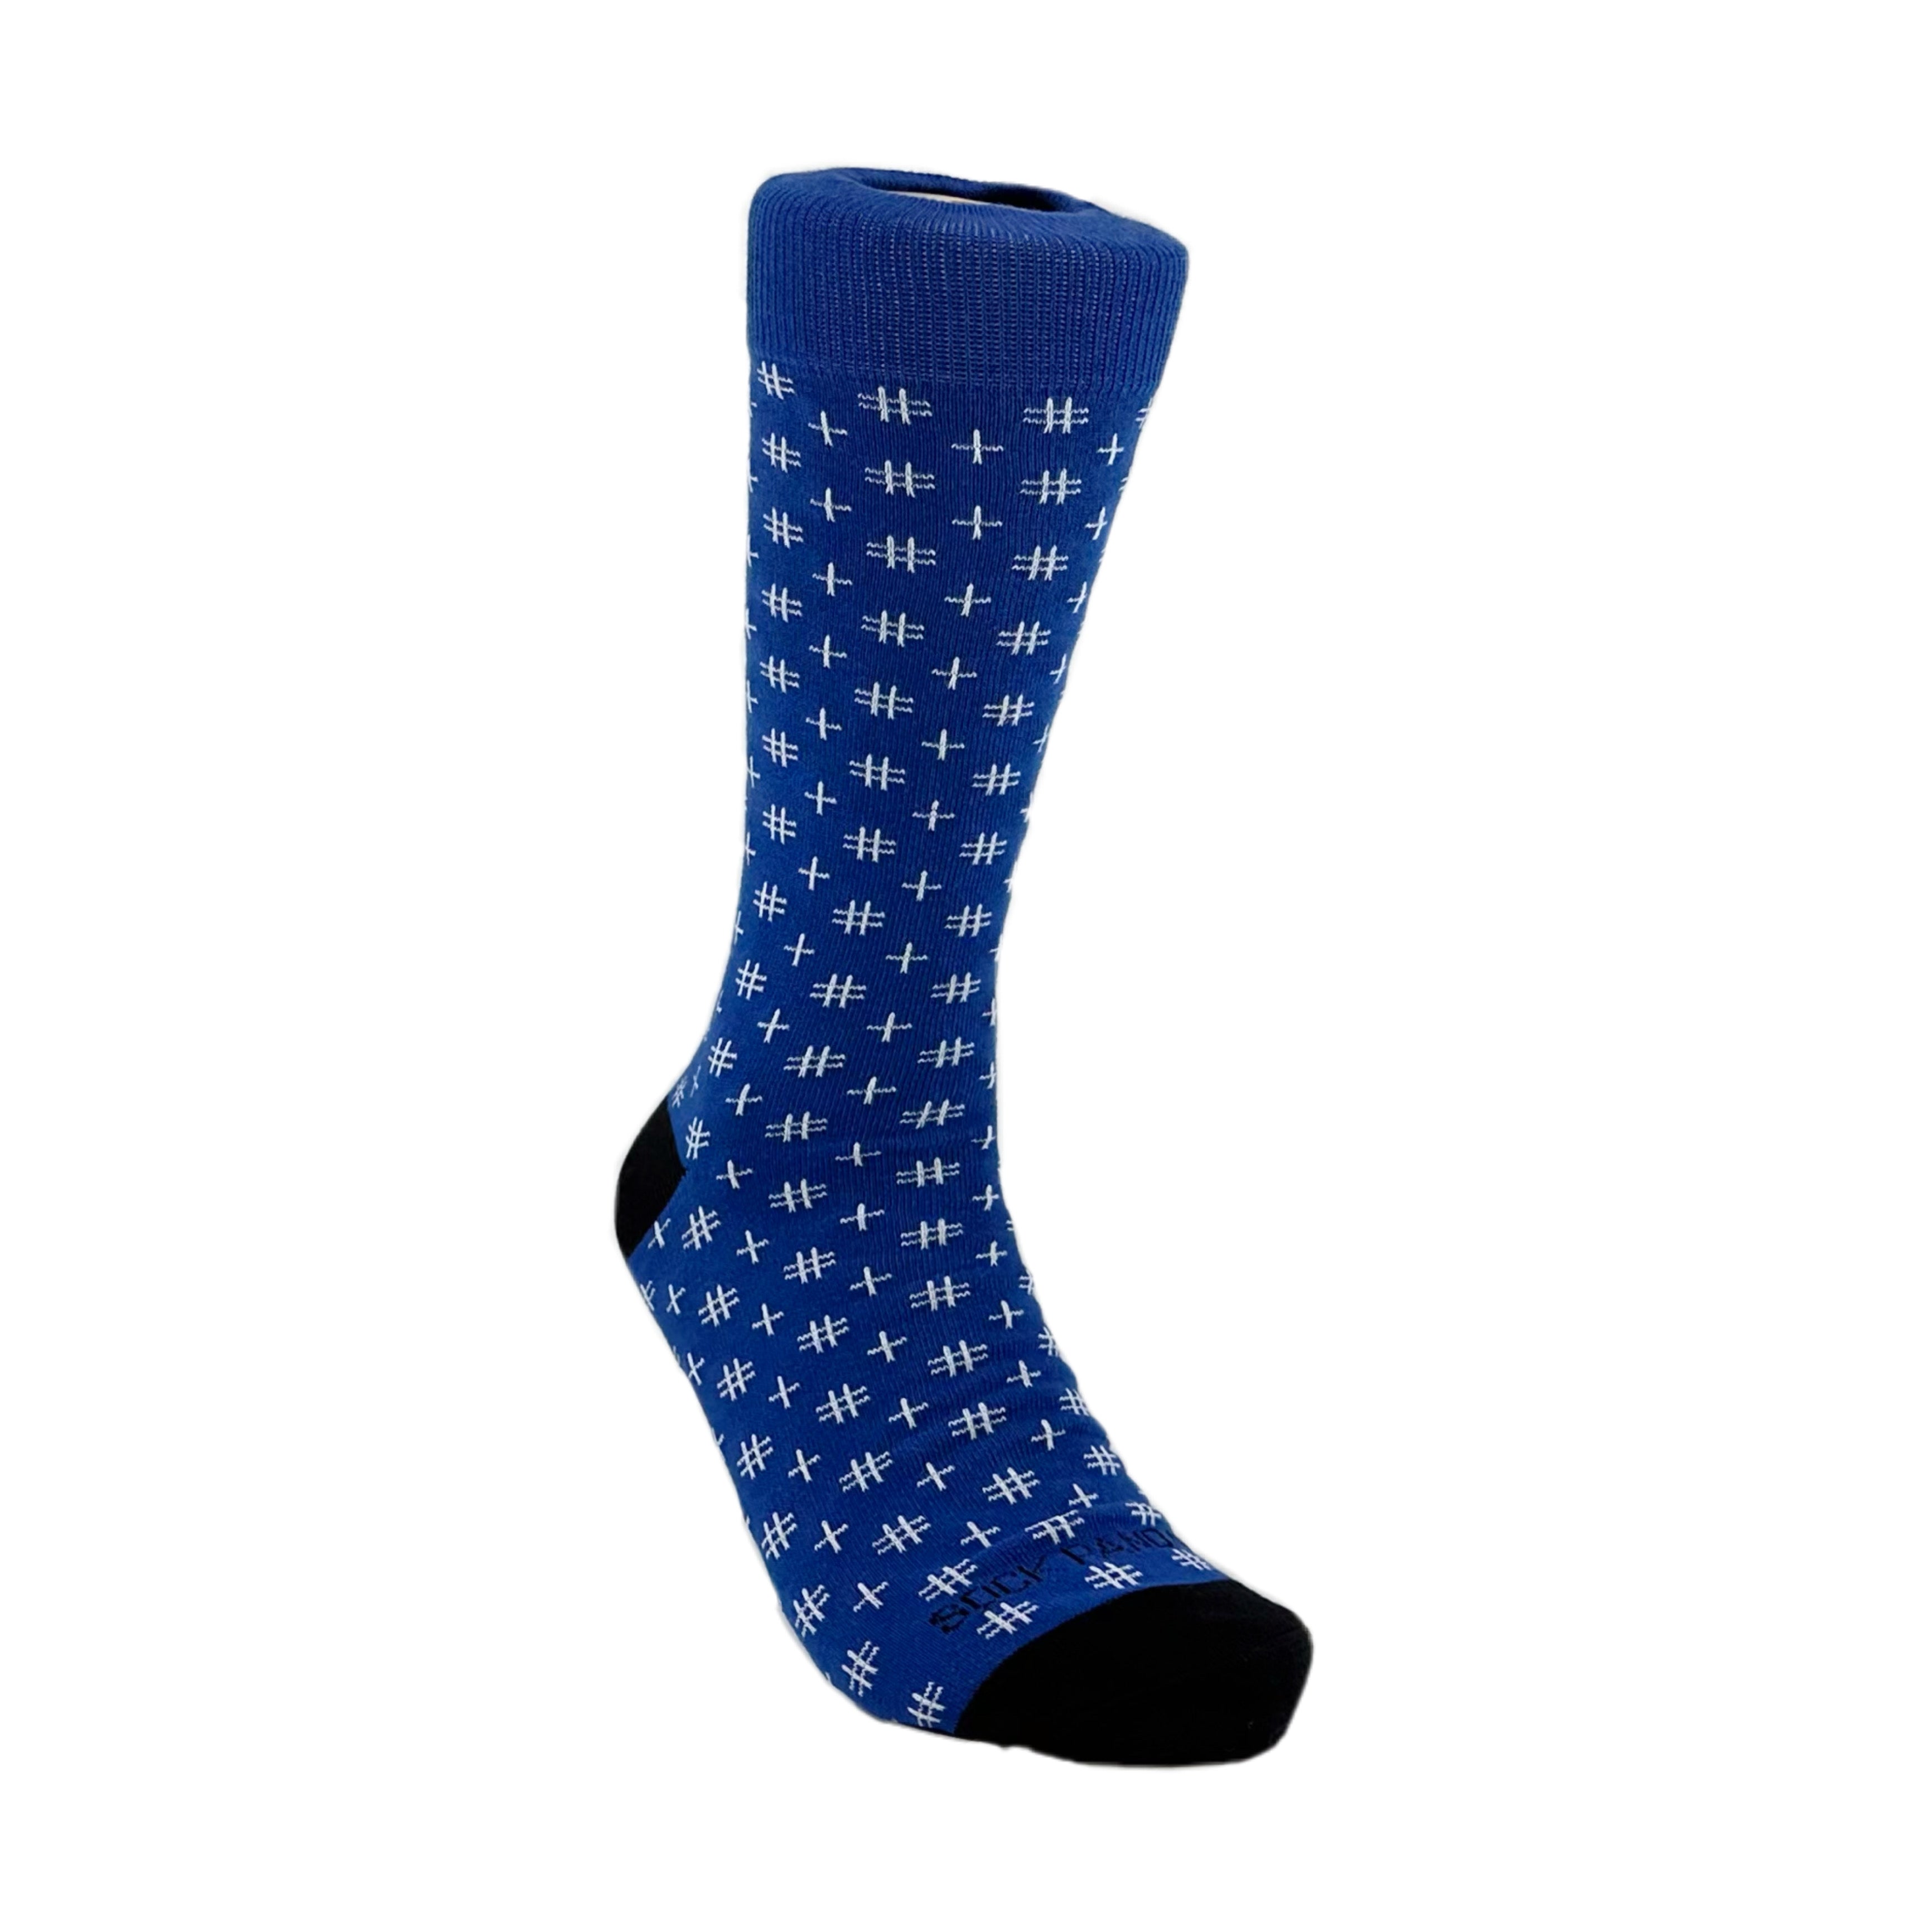 Blue Hashtag Patterned Socks from the Sock Panda